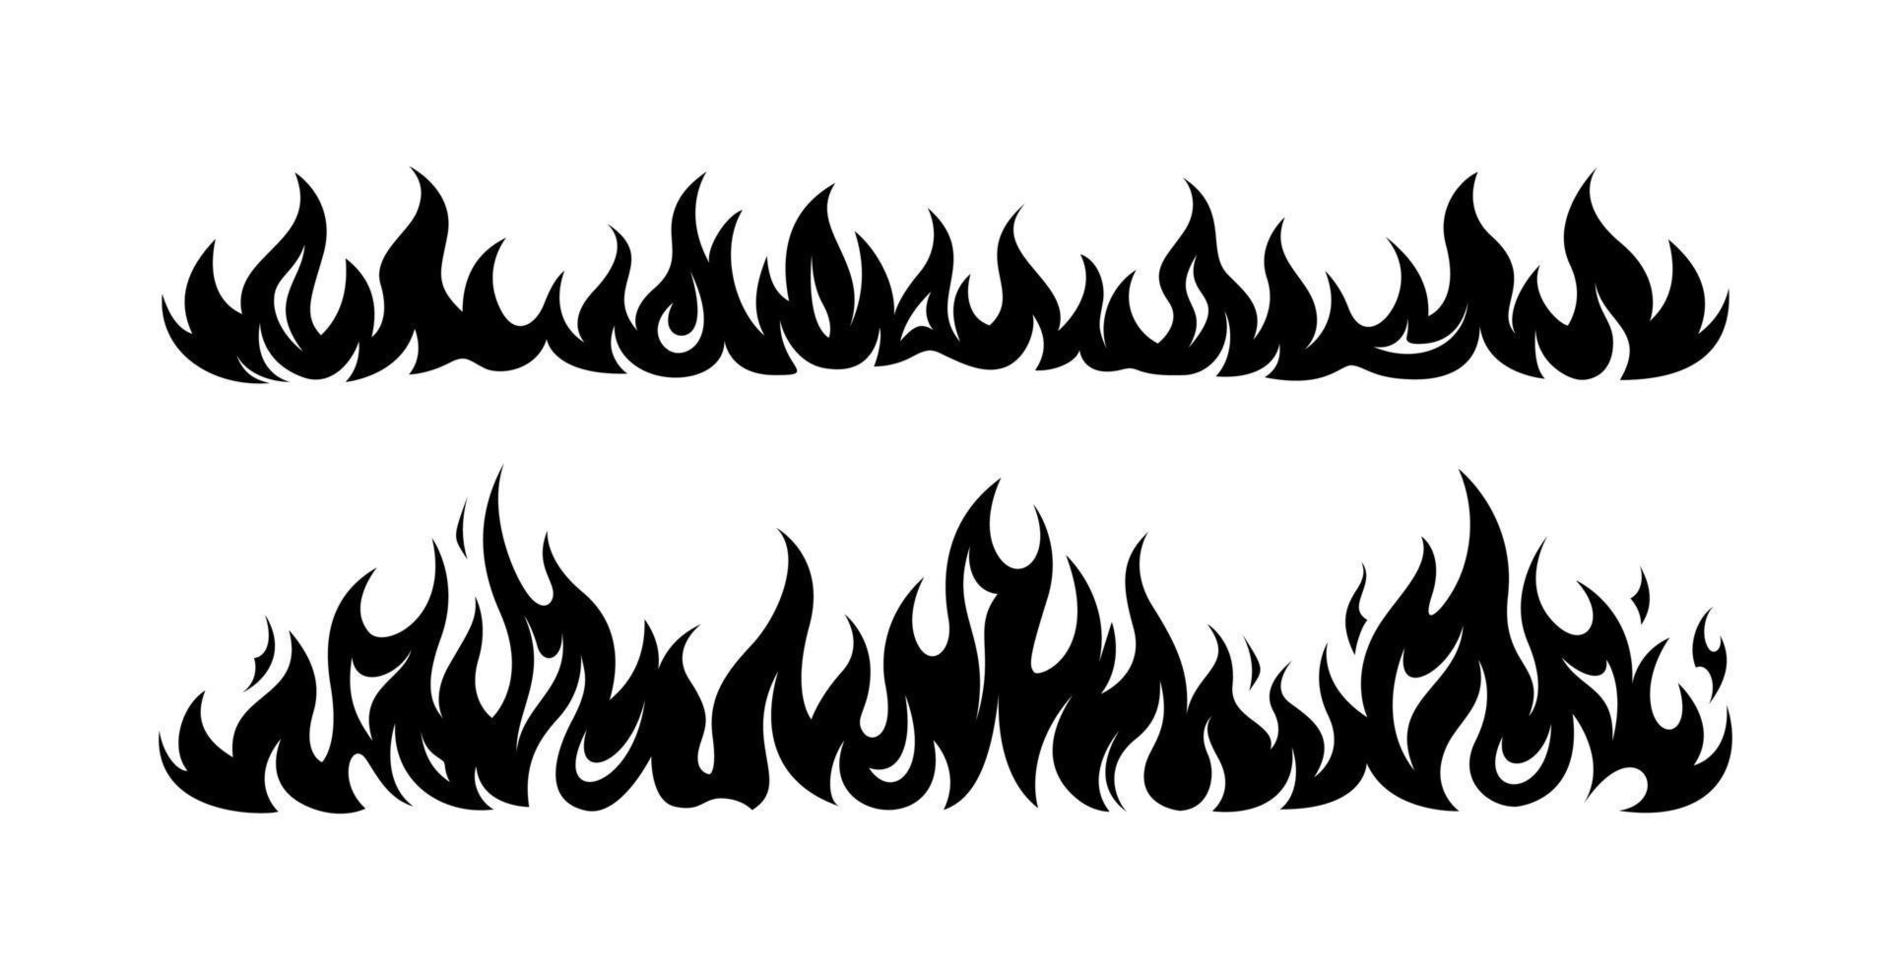 Flame fire border frame silhouette template set vector illustration clipart